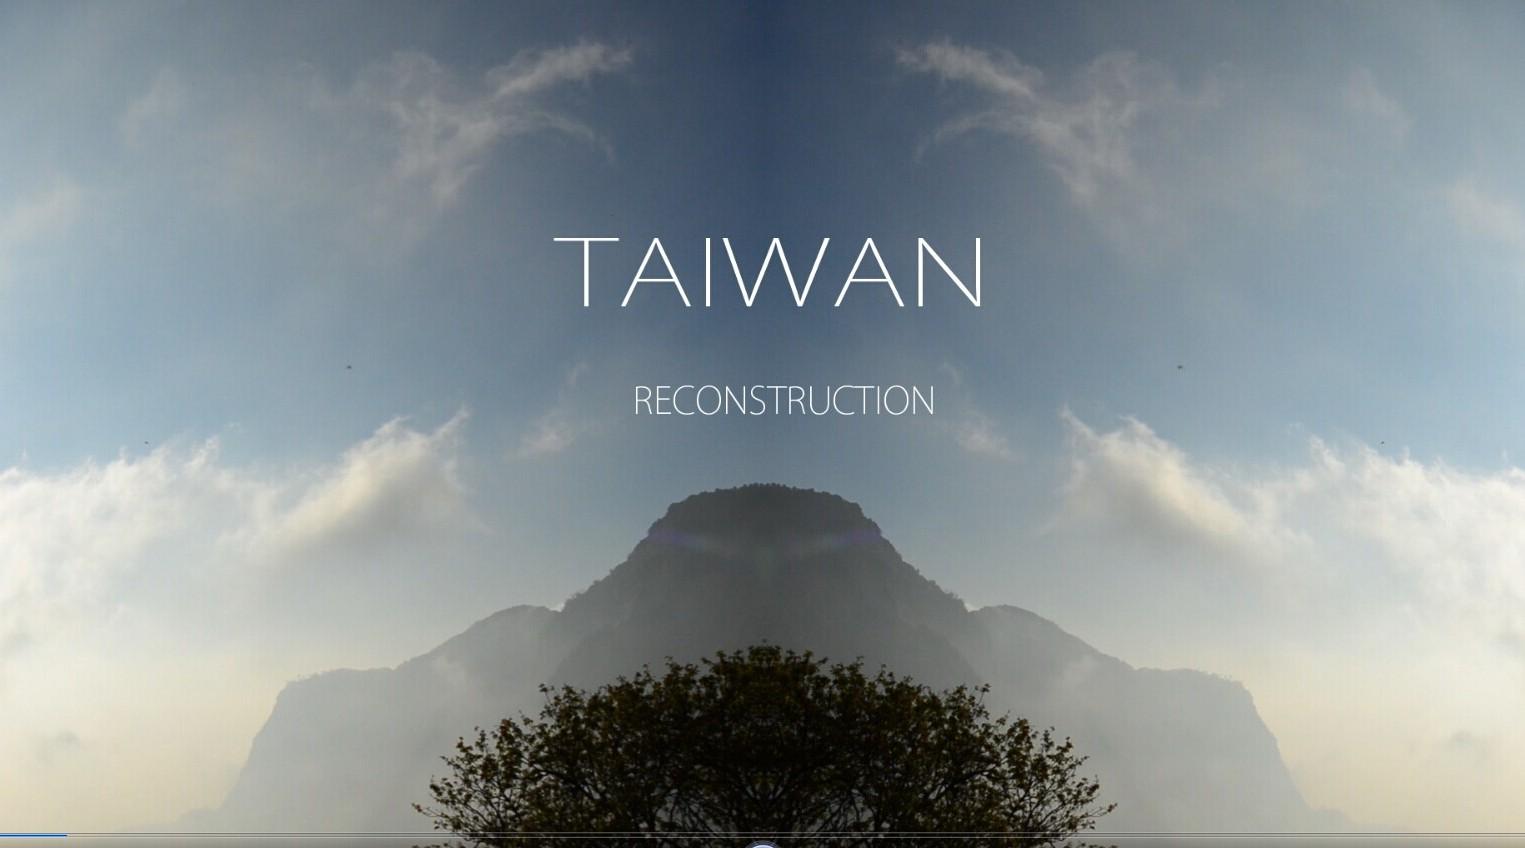 《TAIWAN RECONSTRUCTION》